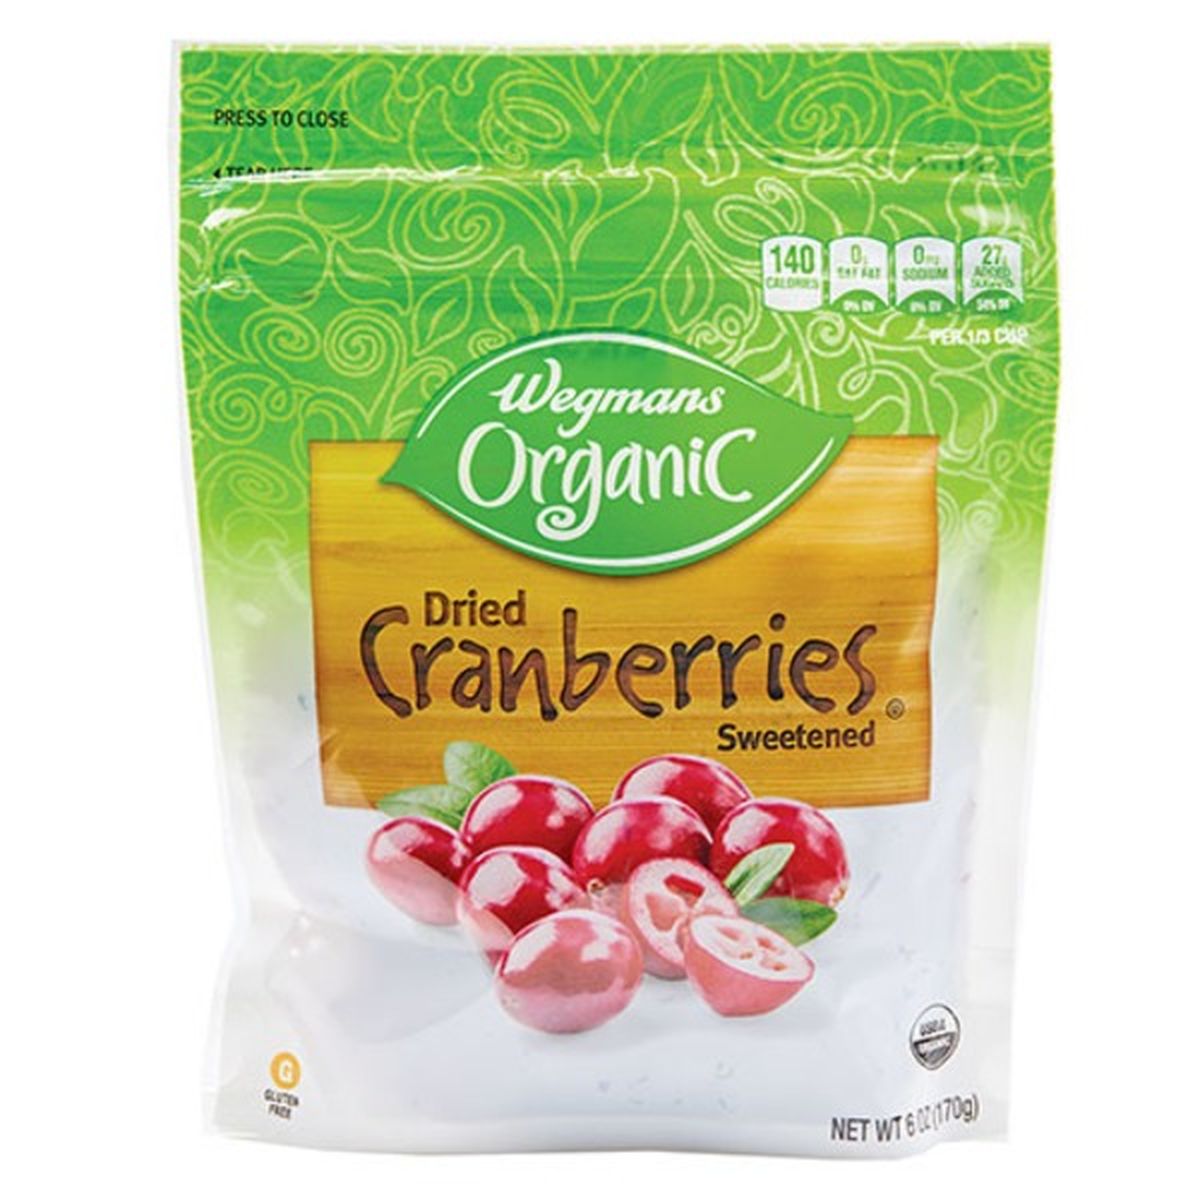 Calories in Wegmans Organic Sweetened Dried Cranberries